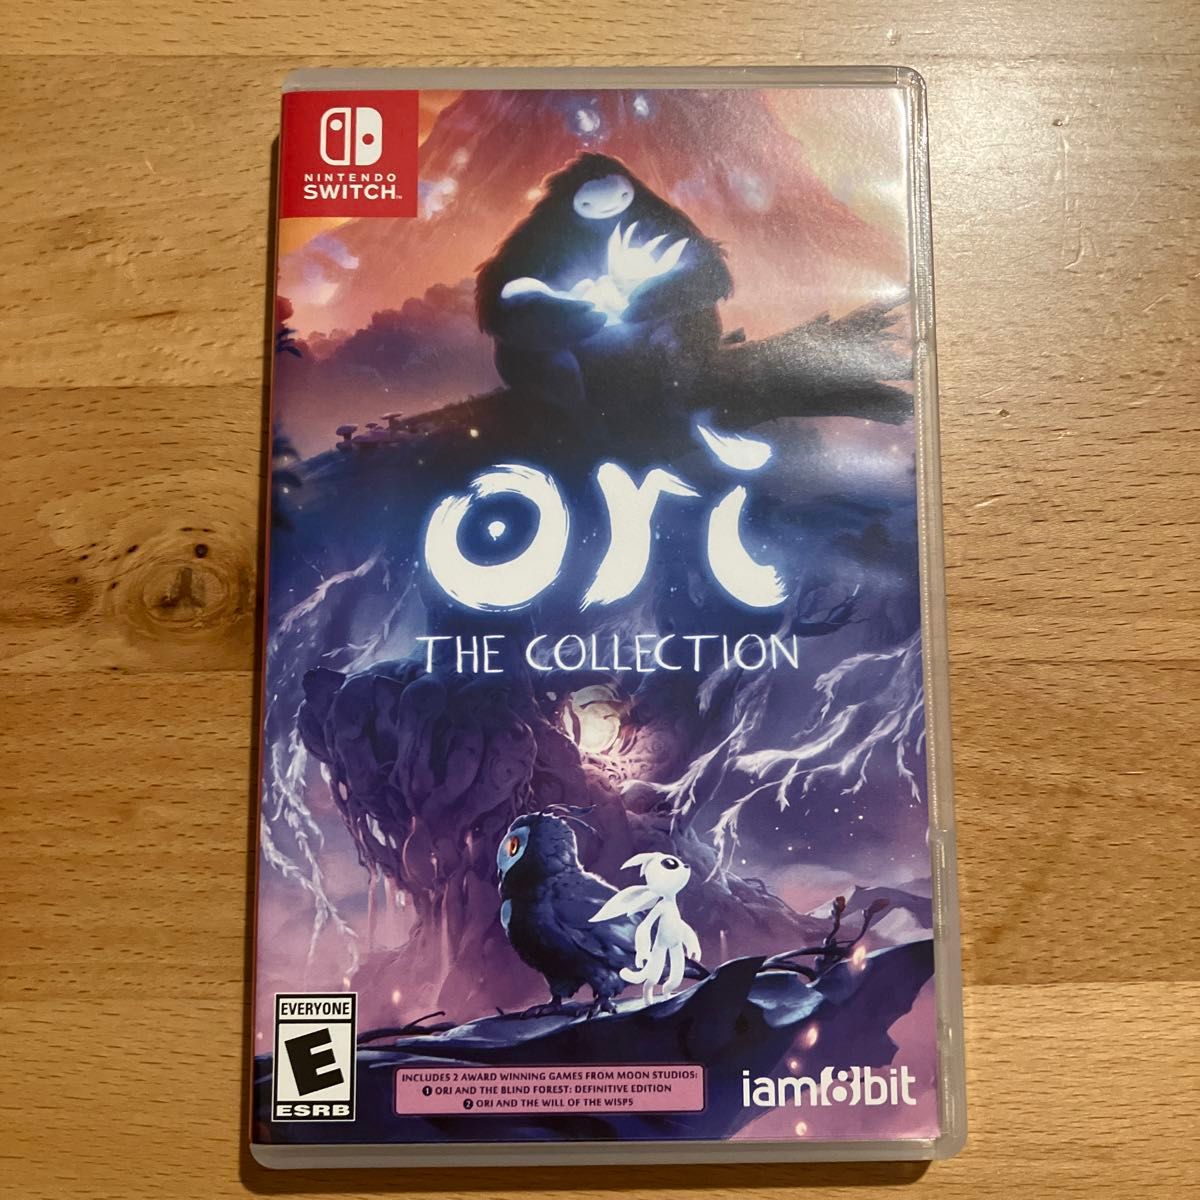 【日本語対応】Ori - The Collection (輸入版) - Nintendo Switch